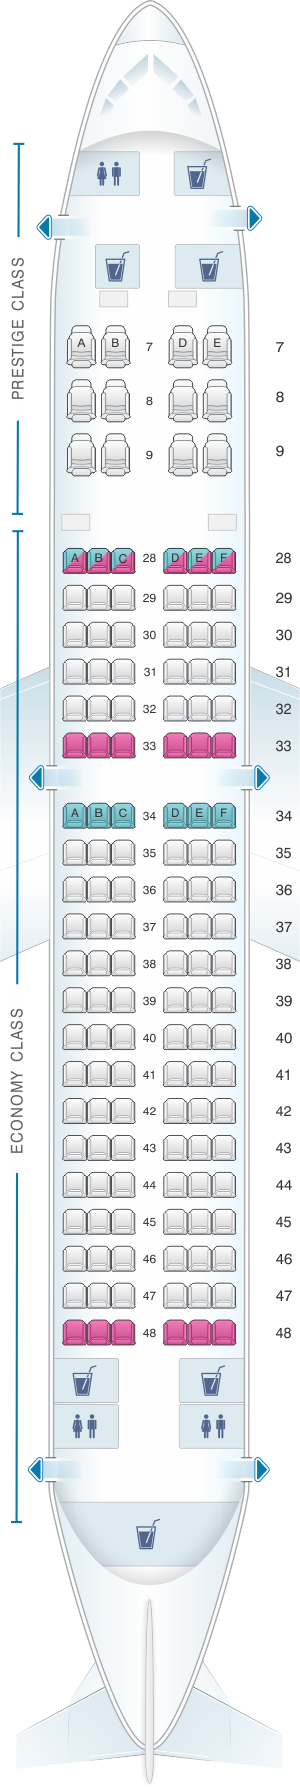 Seat Map Korean Air Boeing B737 800 138PAX | SeatMaestro